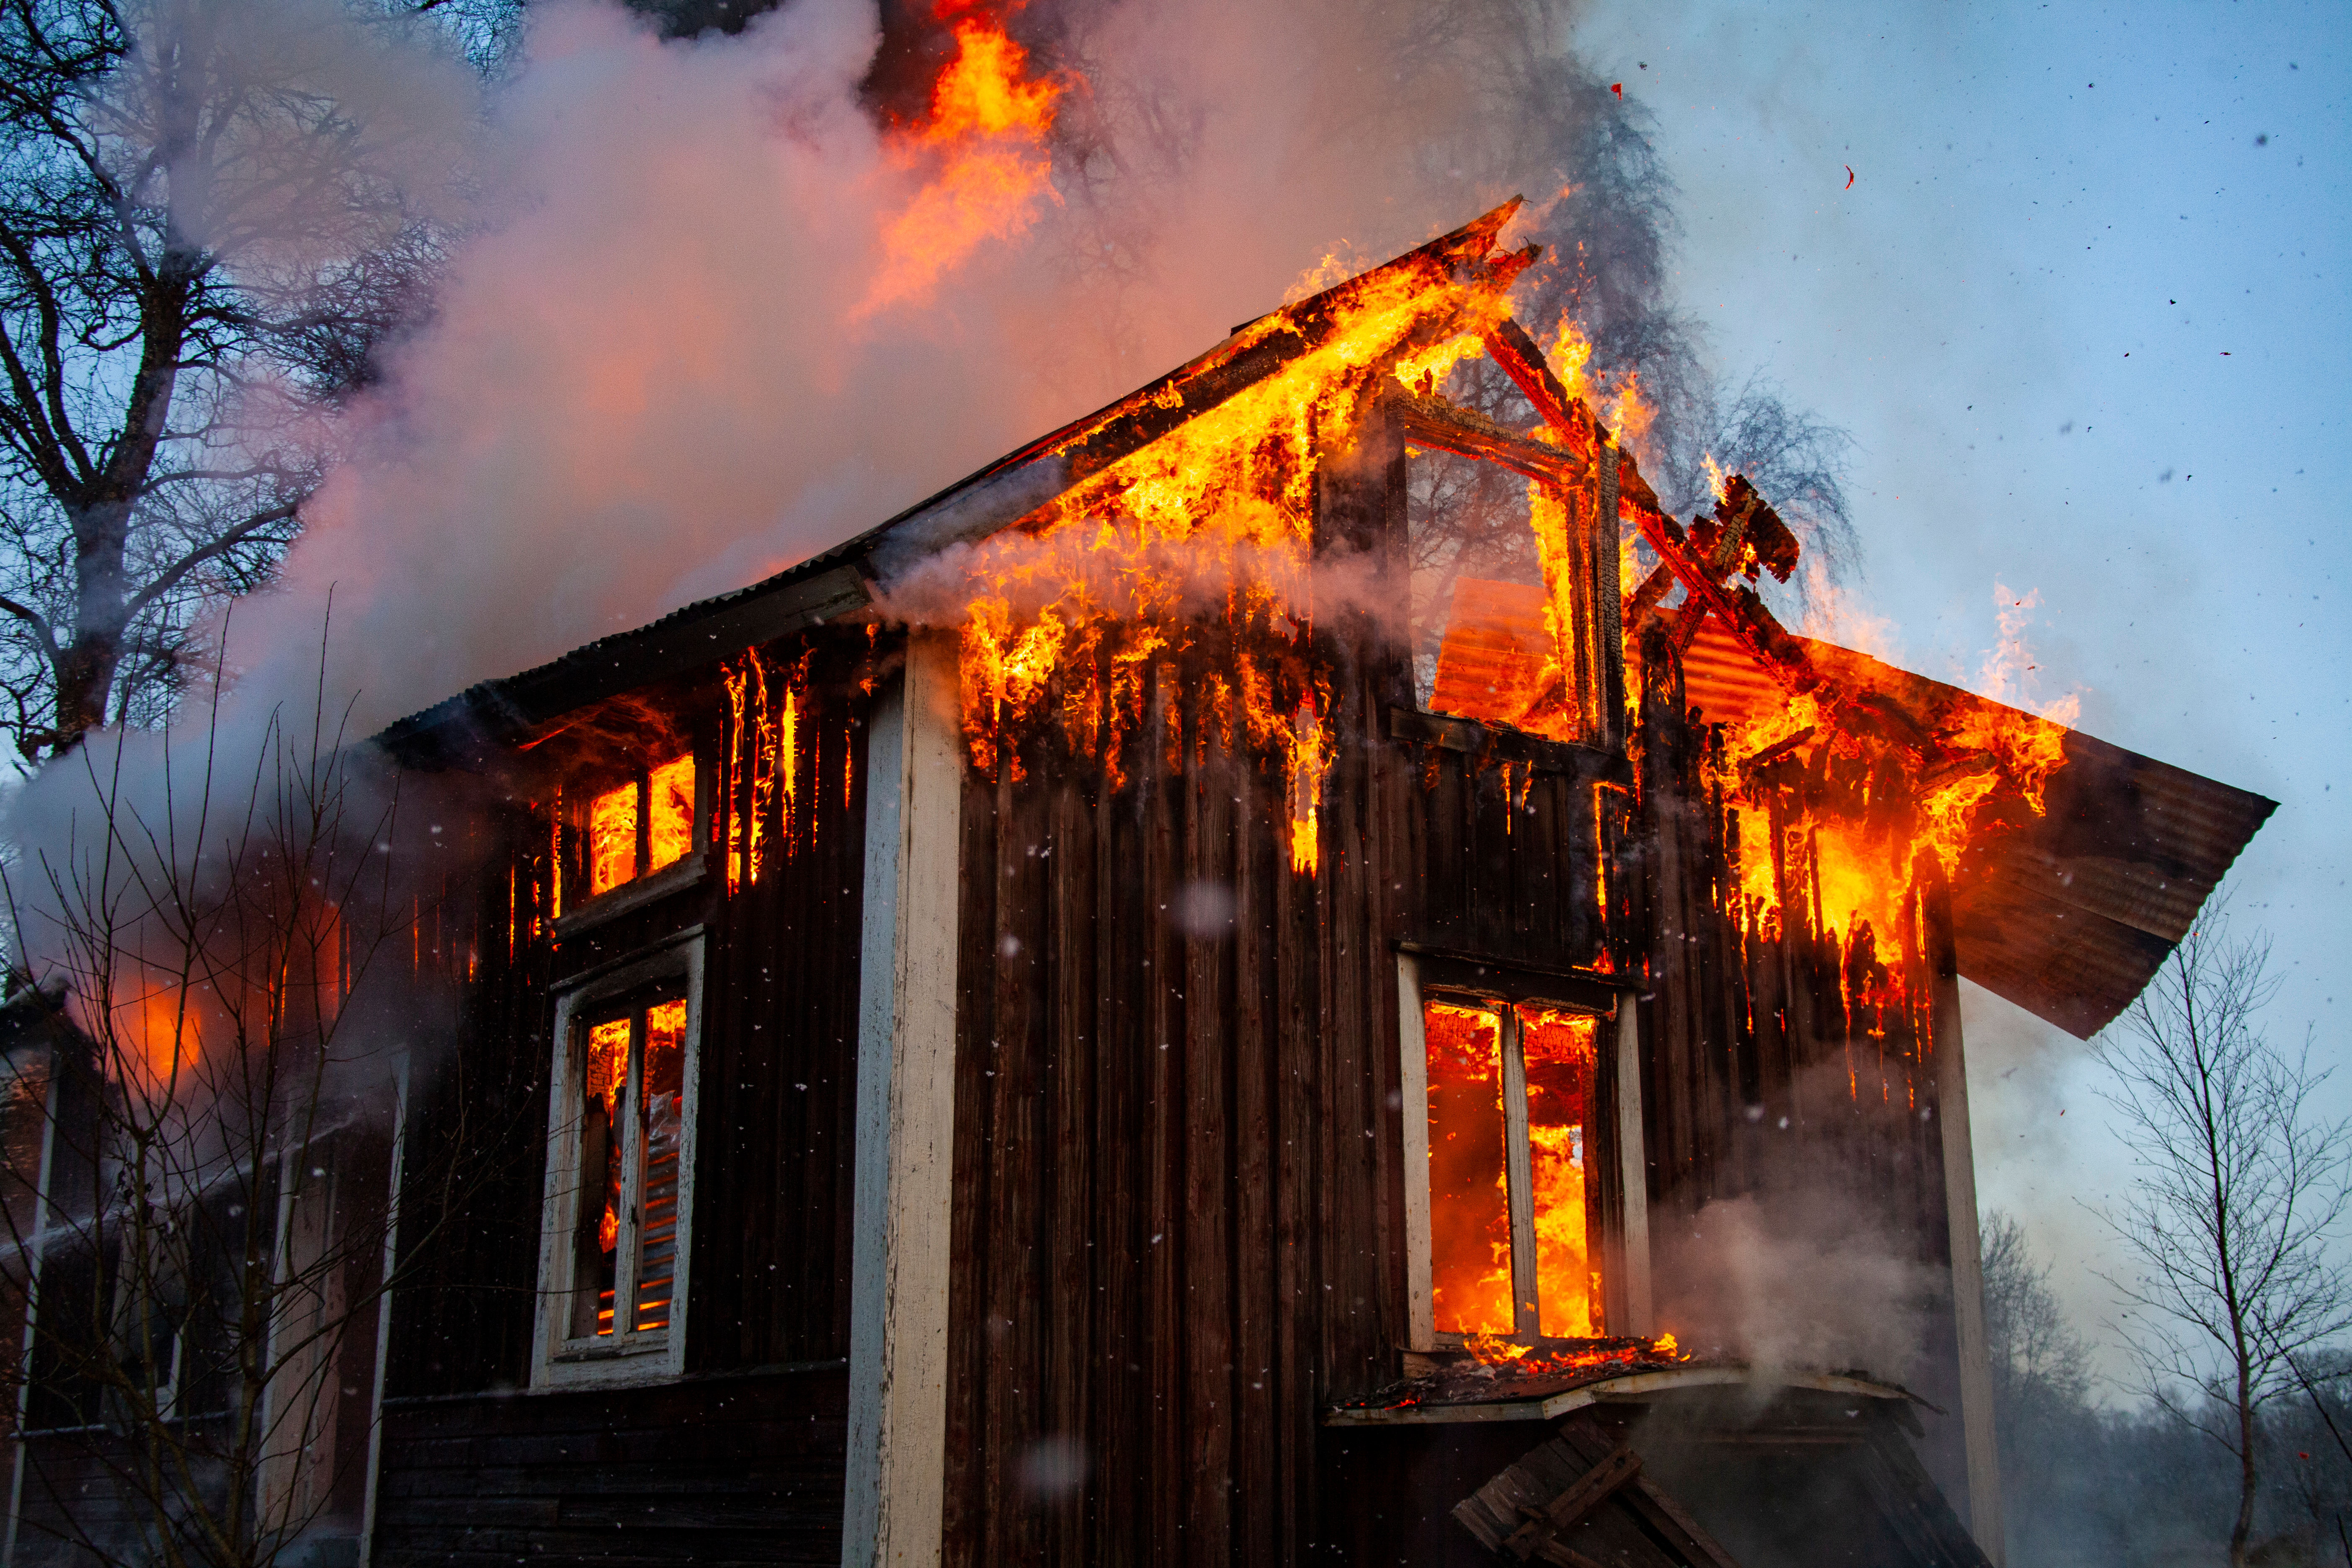 Burning house | Source: Shutterstock.com